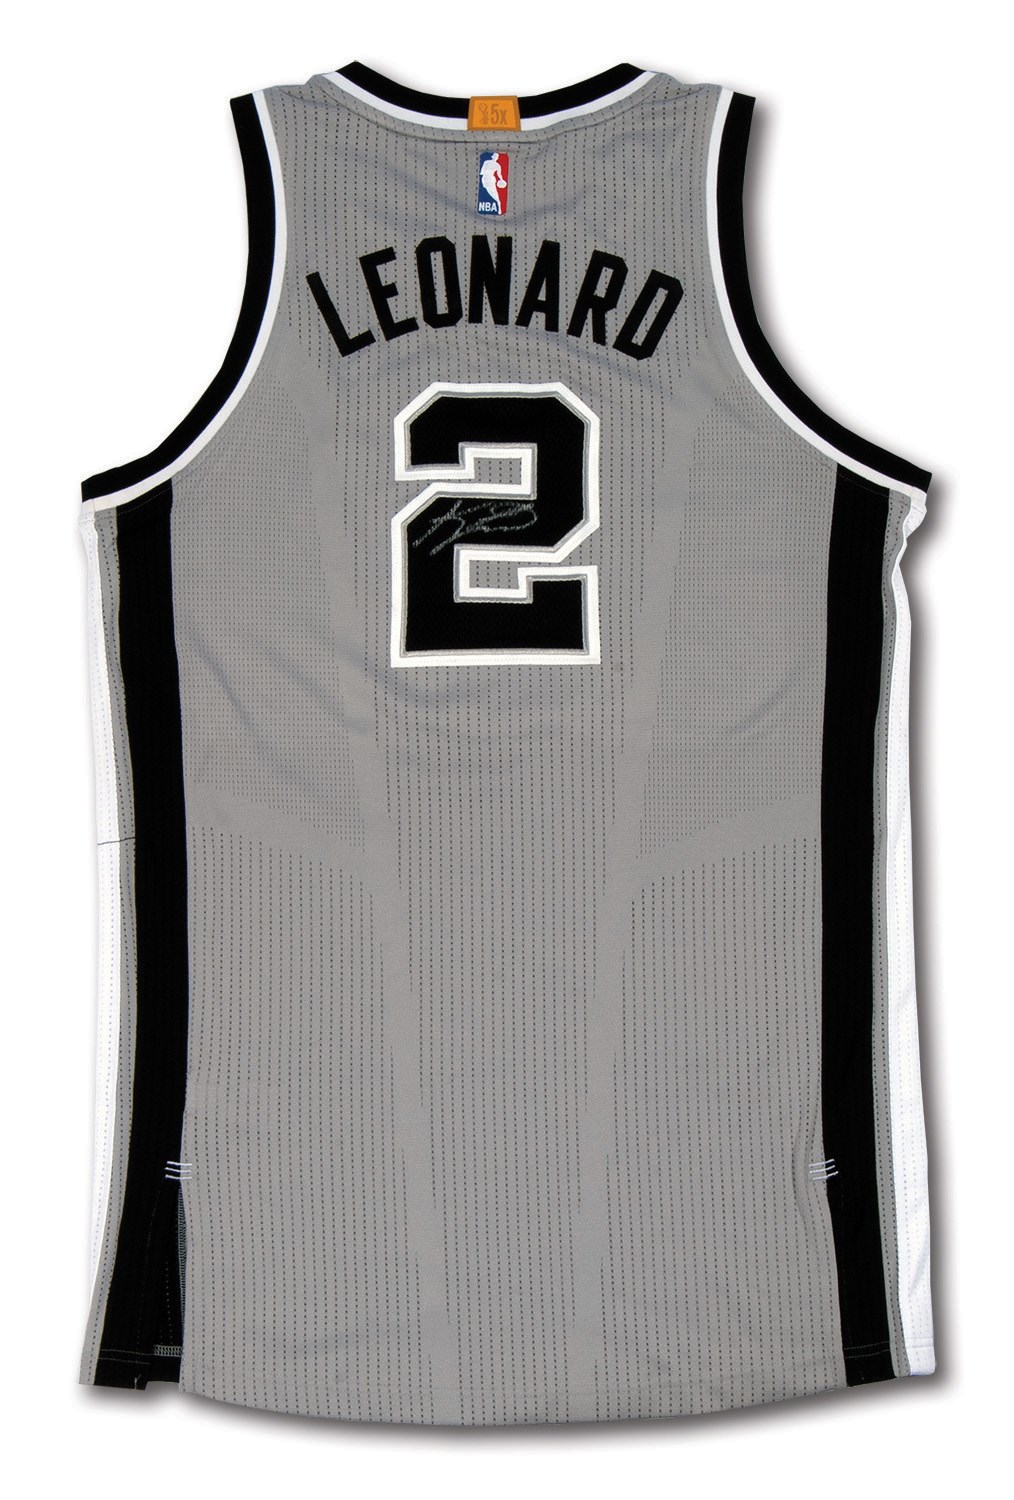 Kawhi Leonard San Antonio Spurs Signed Autographed Finals #2 Jersey –